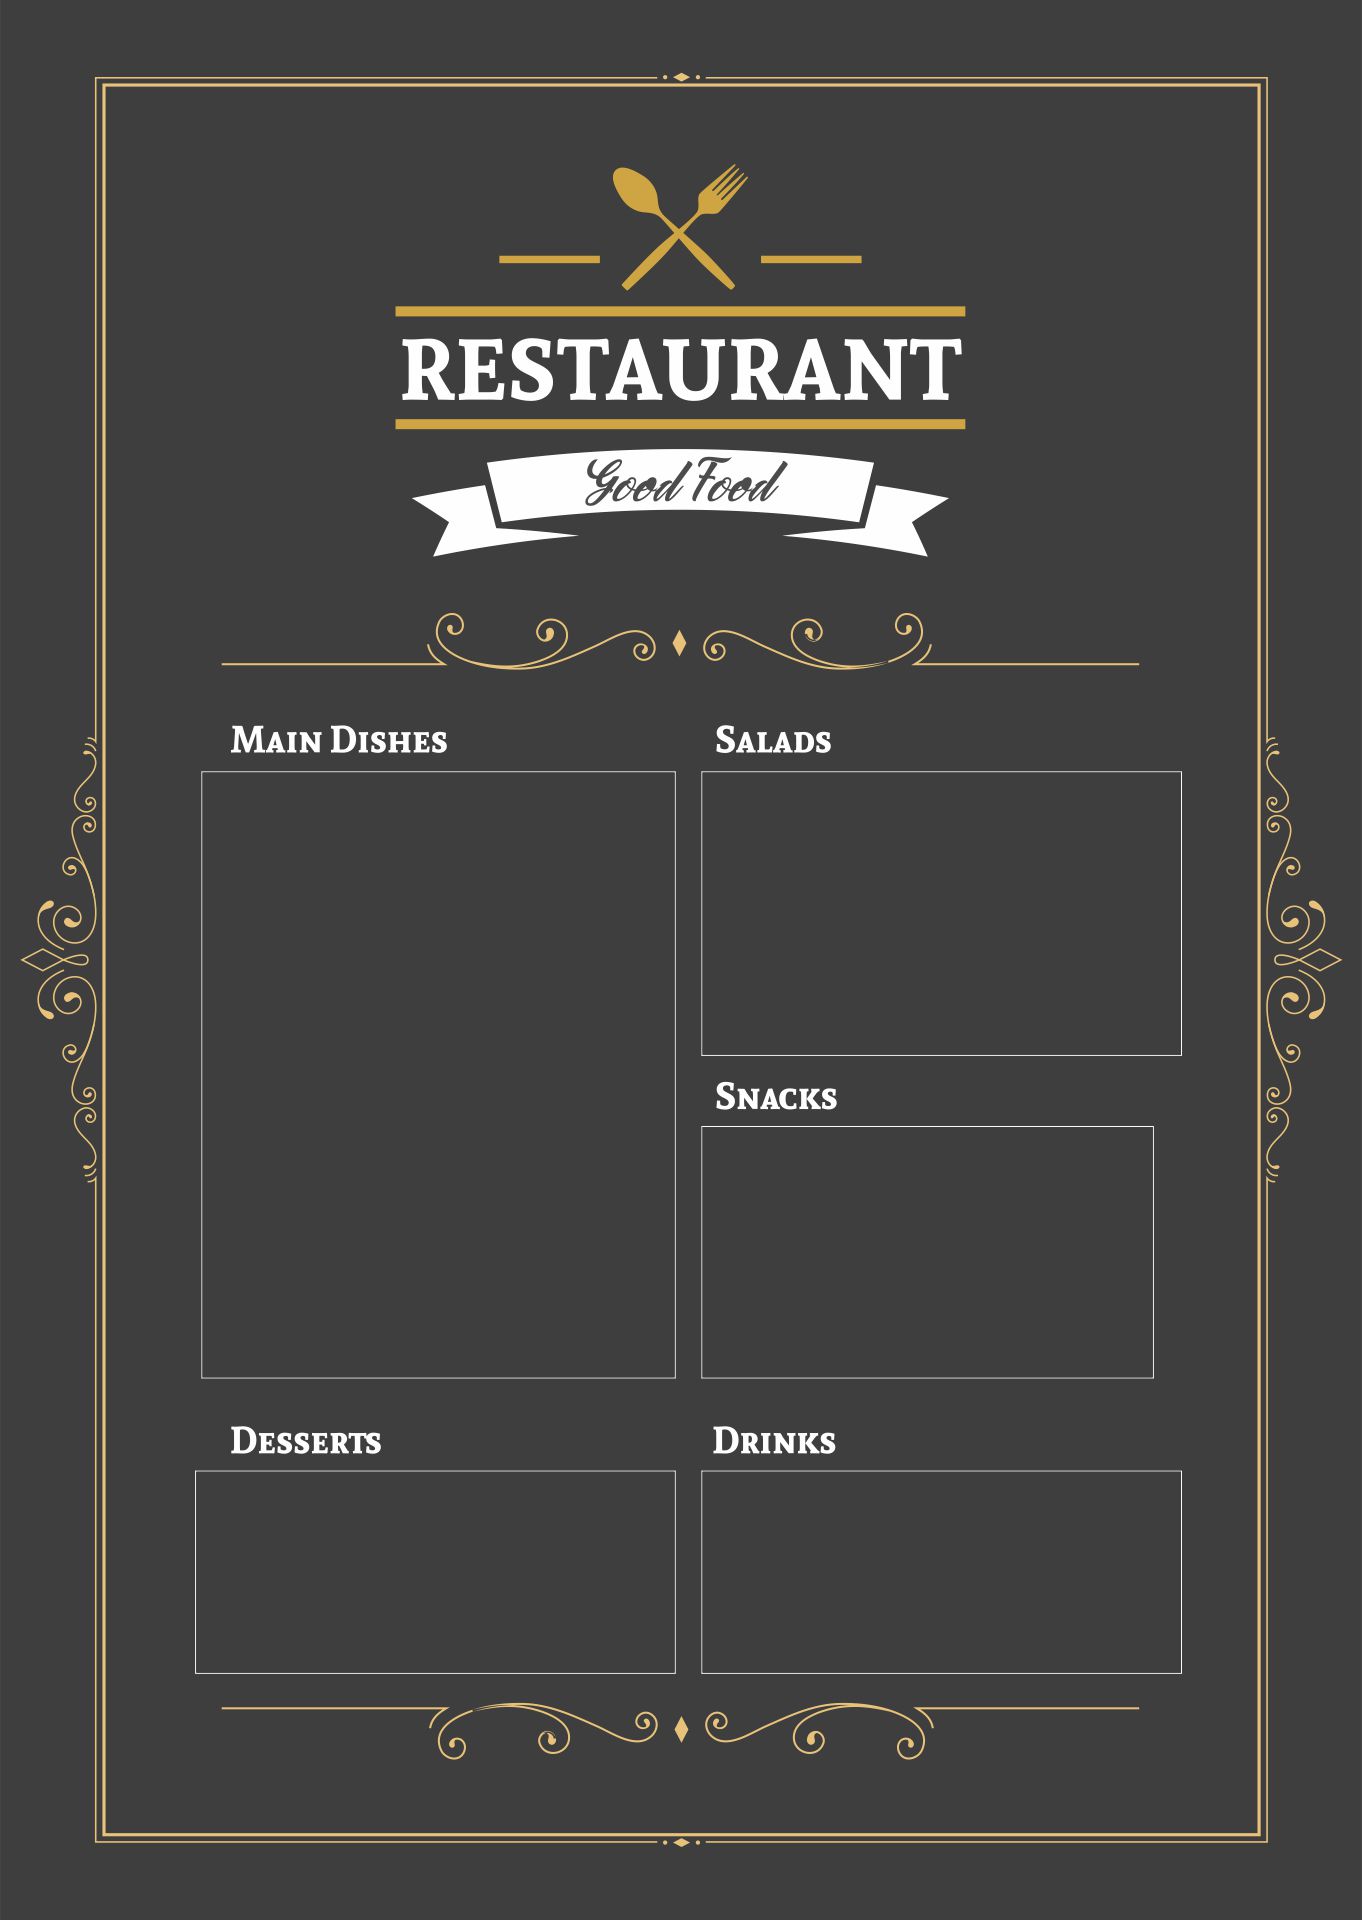 Adobe InDesign to editable, printable restaurant menu? r/indesign